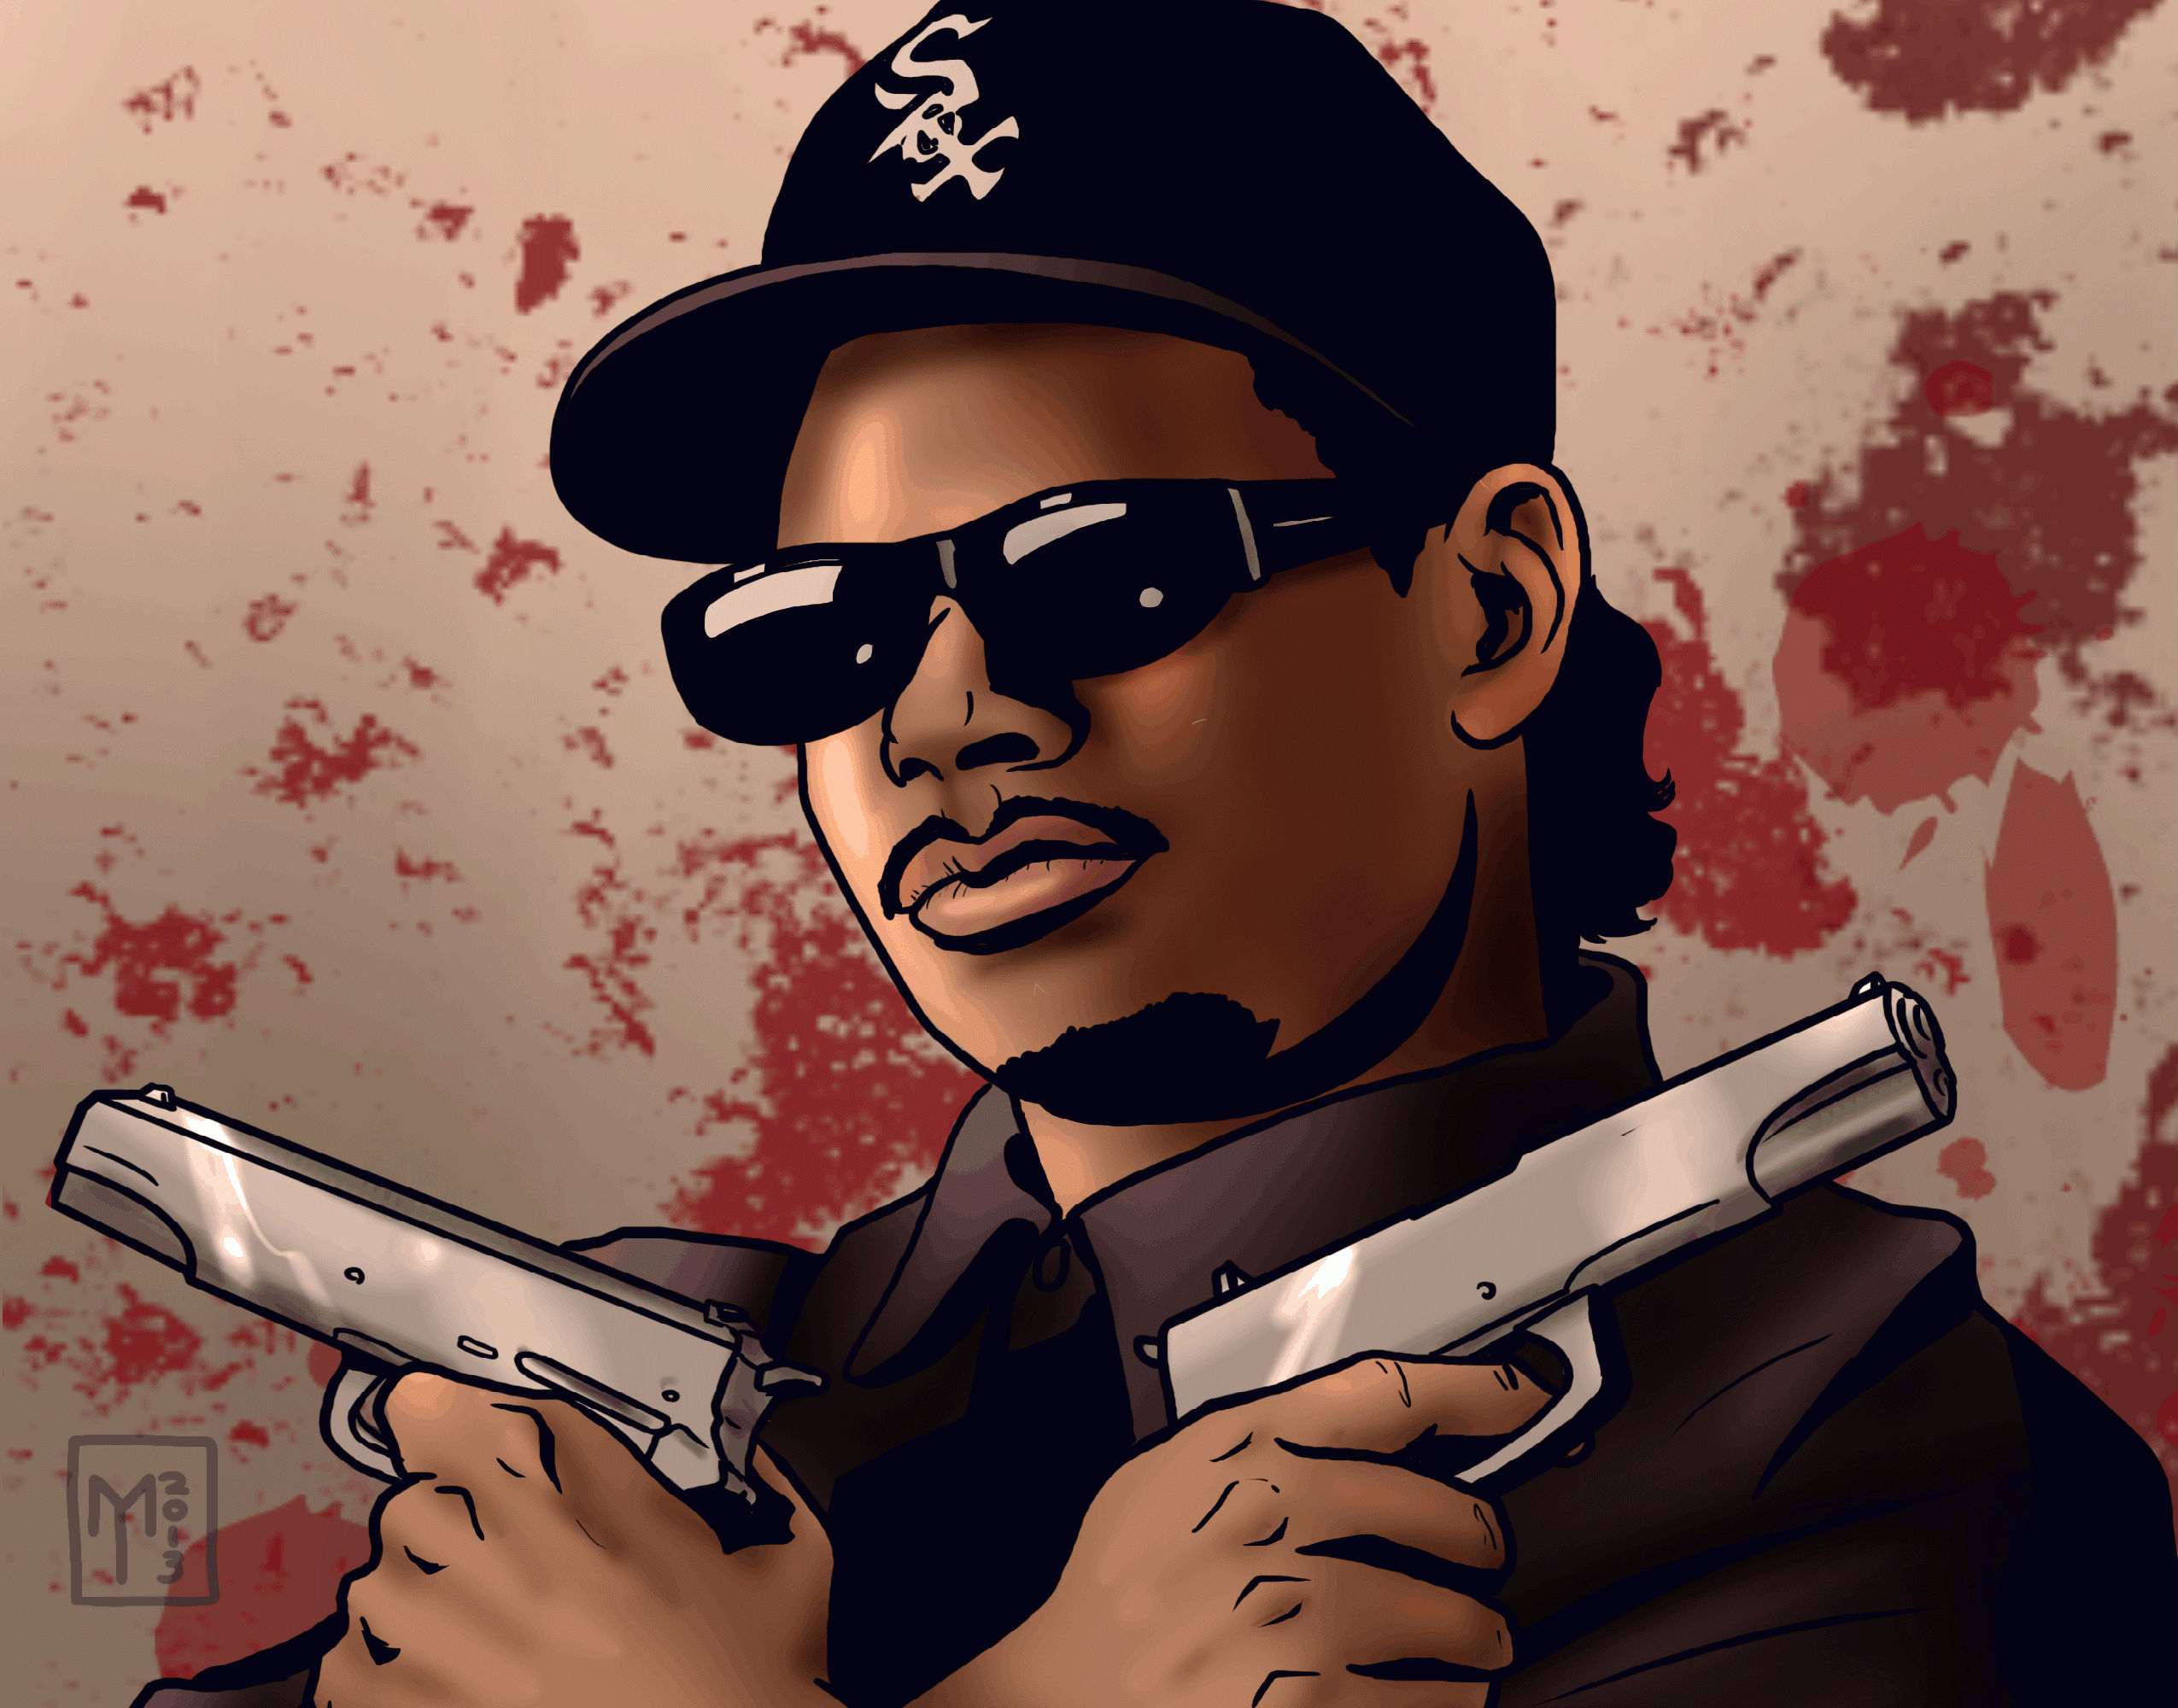 Eazy E Nwa Gangsta Rapper Rap Hip Hop Weapon Gun D Wallpaper